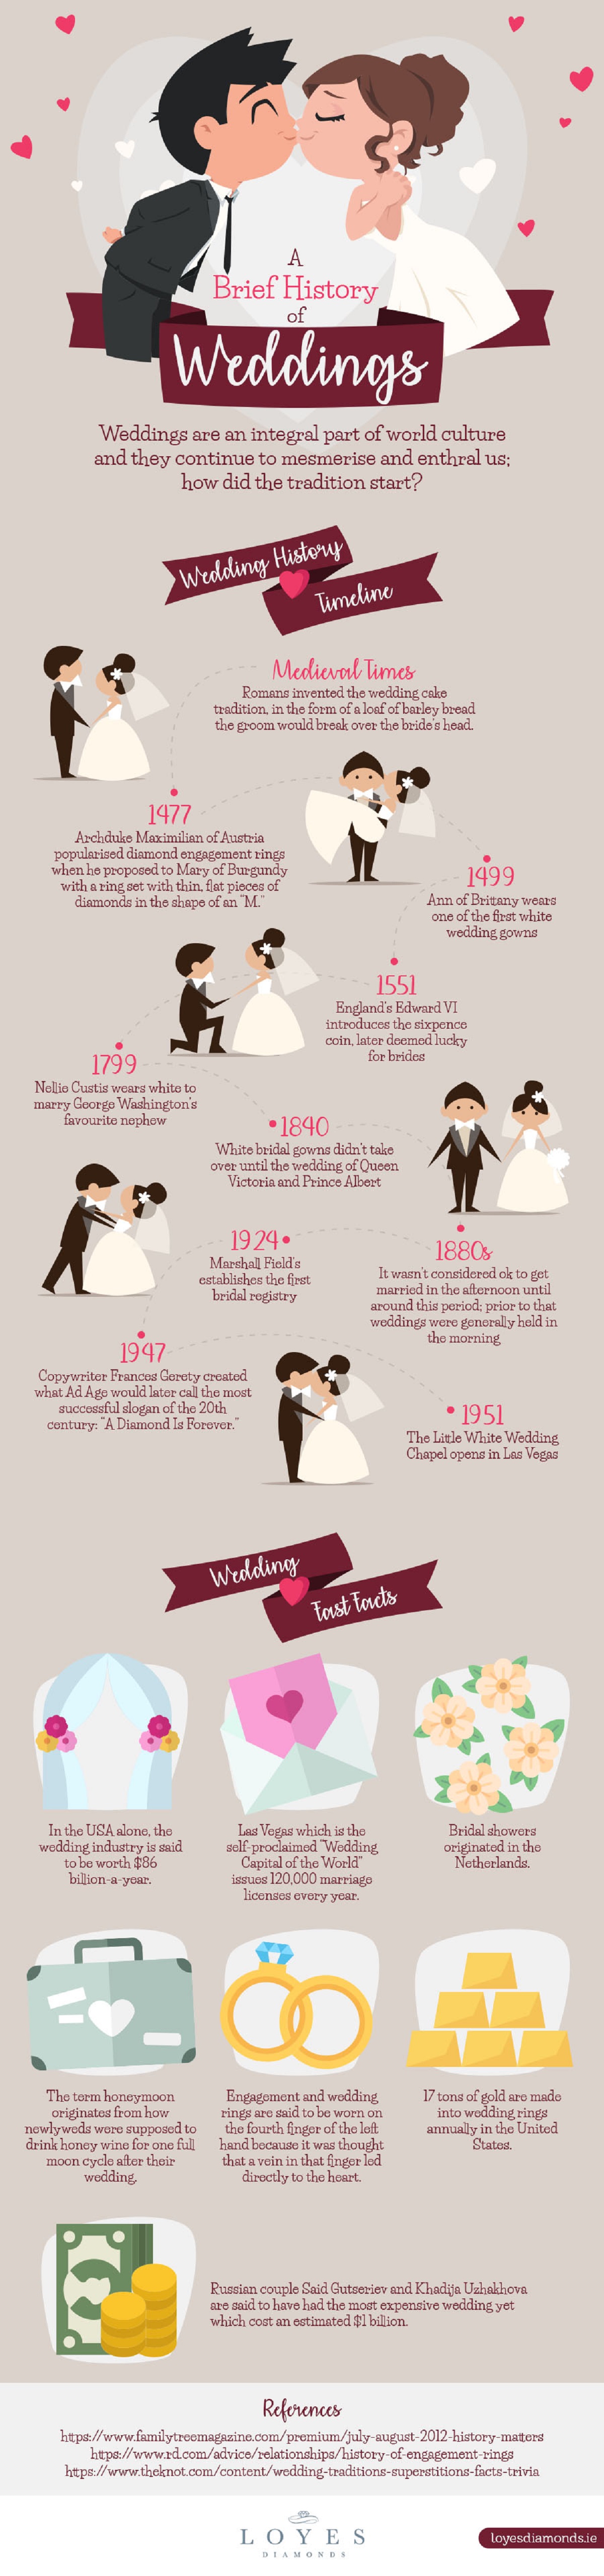 history-of-weddings-infographic